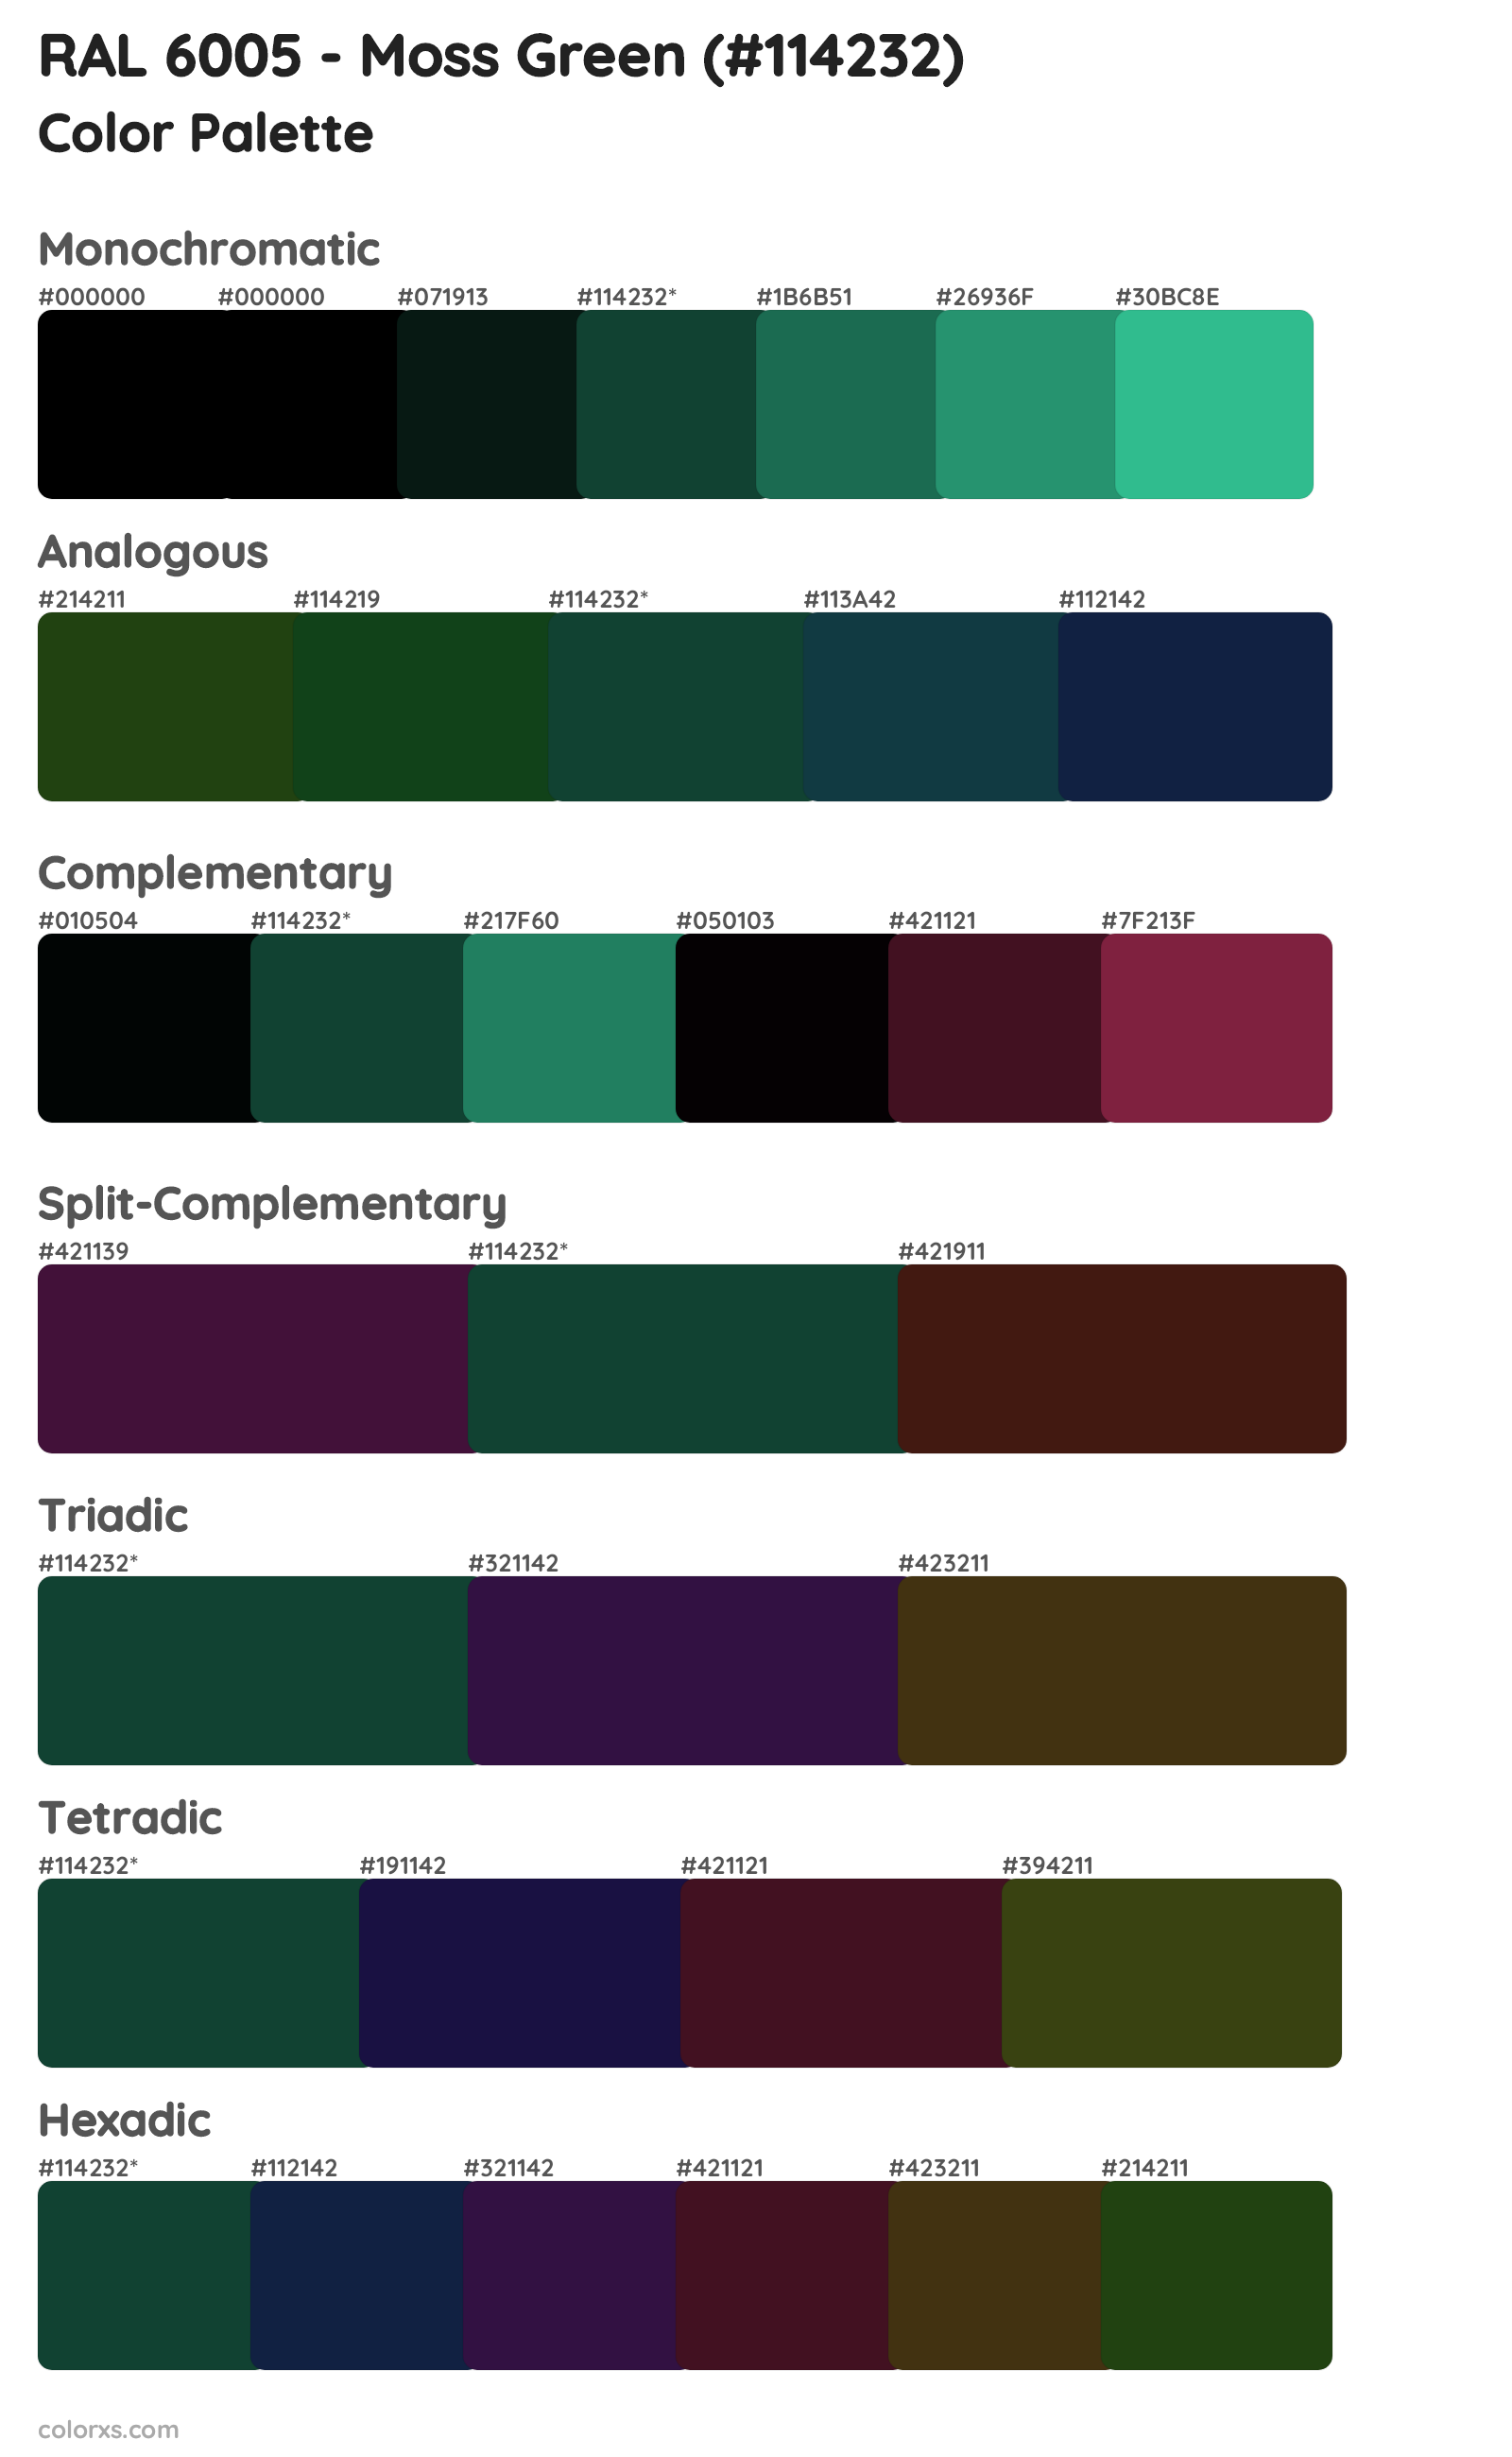 RAL 6005 - Moss Green Color Scheme Palettes